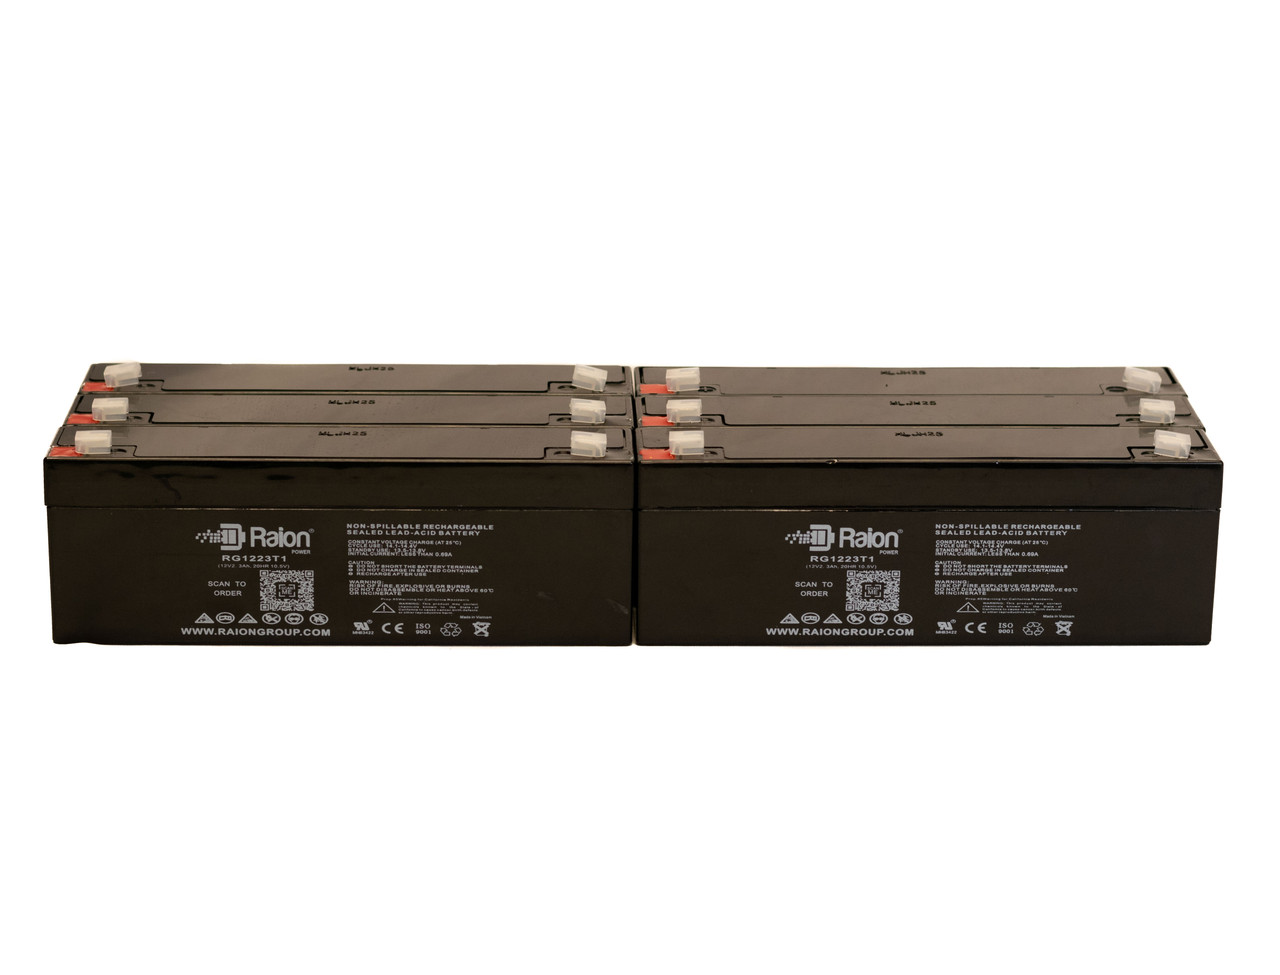 Raion Power 12V 2.3Ah RG1223T1 Compatible Replacement Battery for Magnavolt SLA12-2.3 - 6 Pack